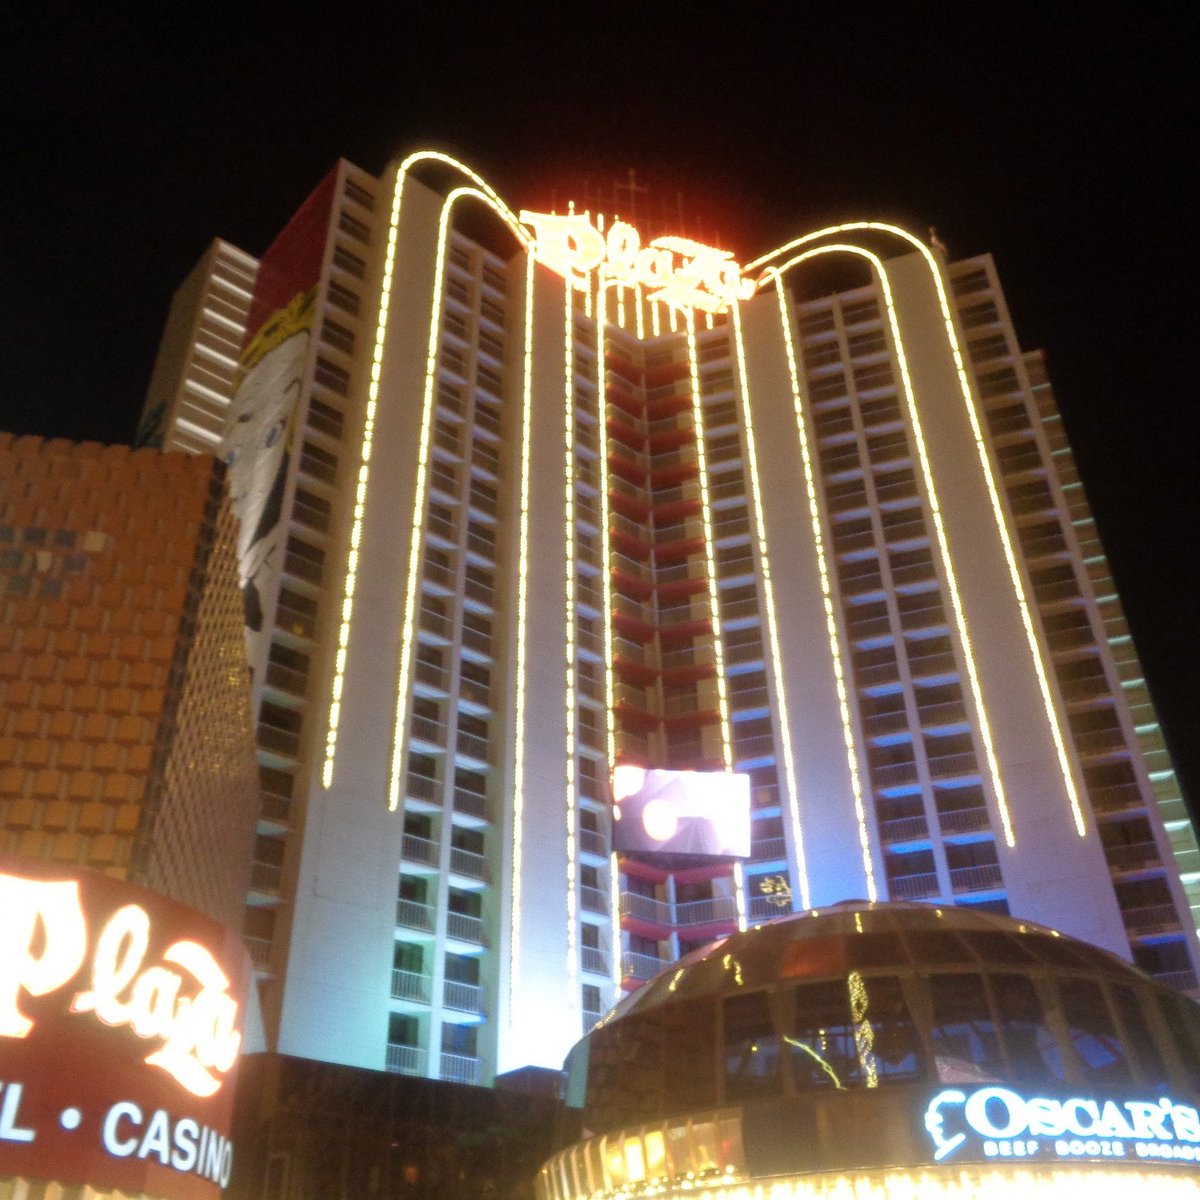 CASINO AT PLAZA HOTEL (Las Vegas) - SABER antes de